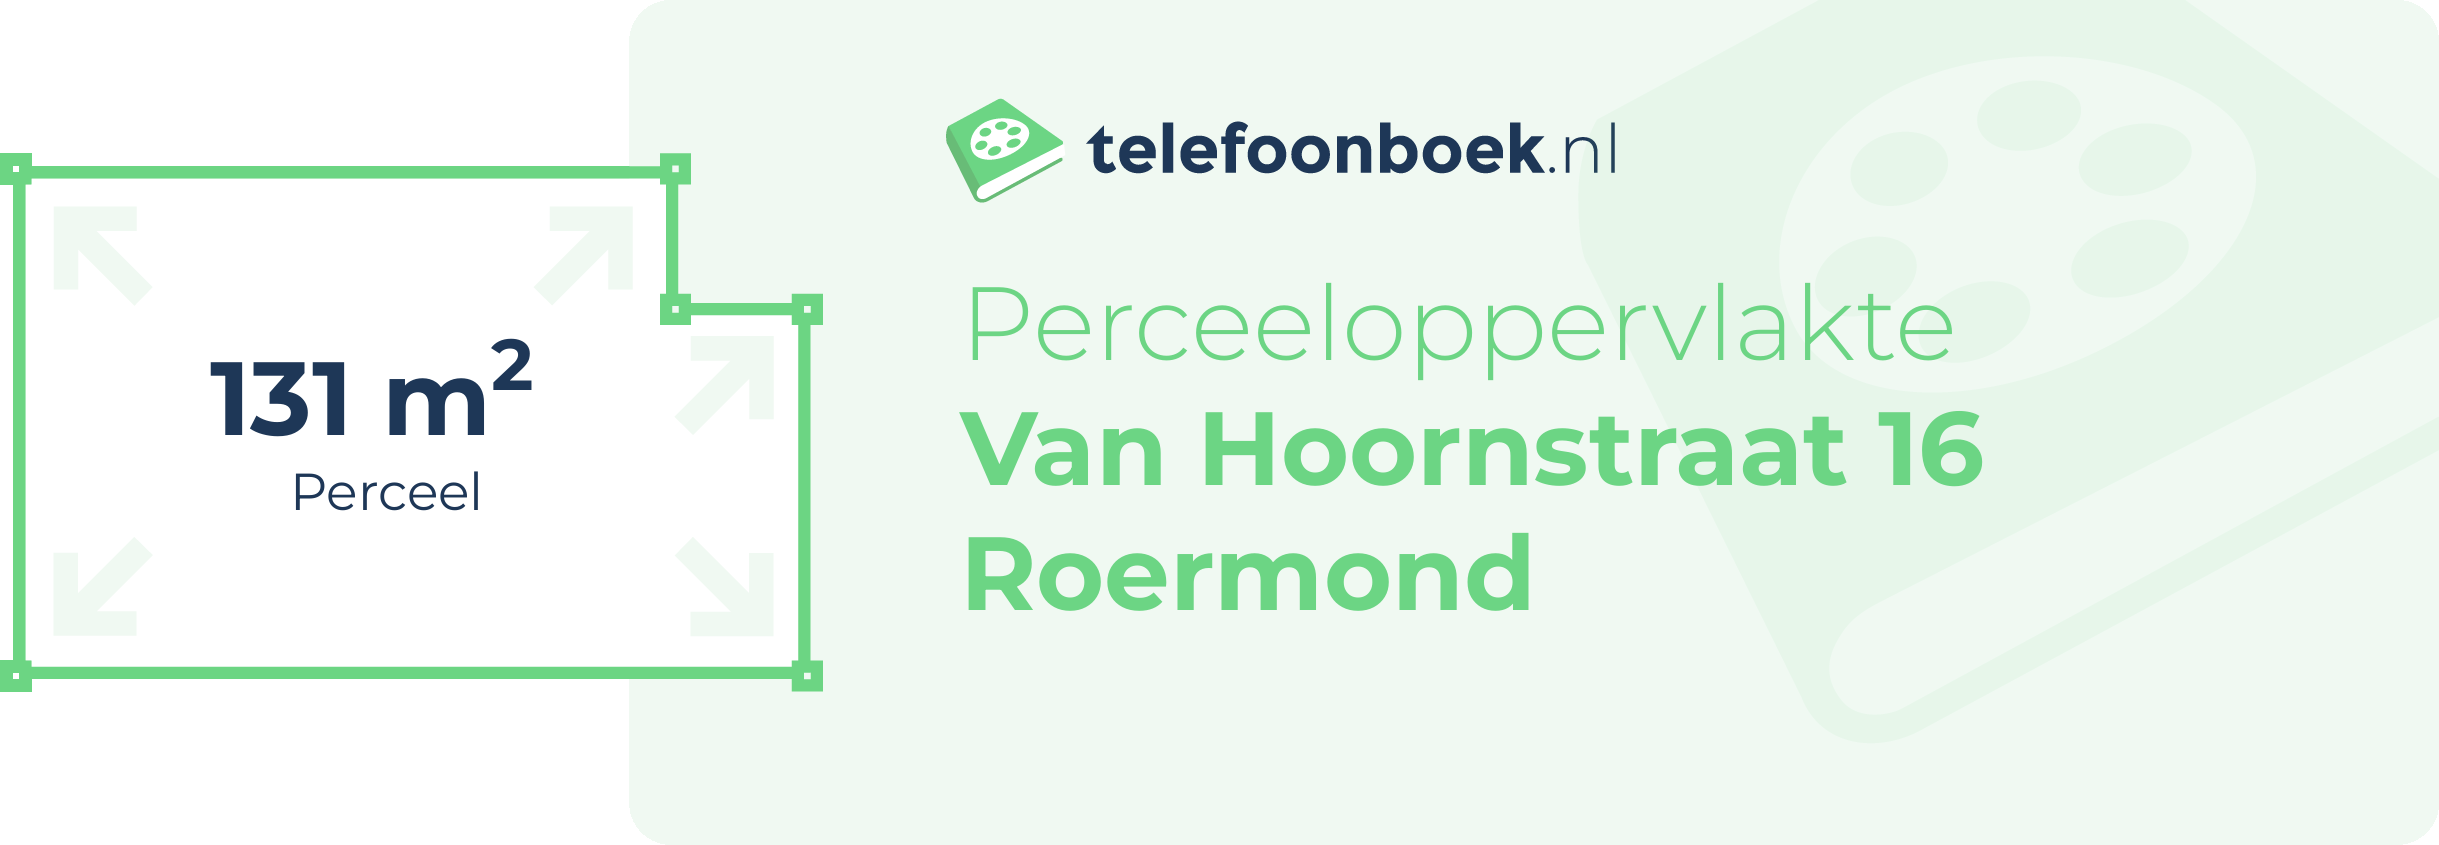 Perceeloppervlakte Van Hoornstraat 16 Roermond